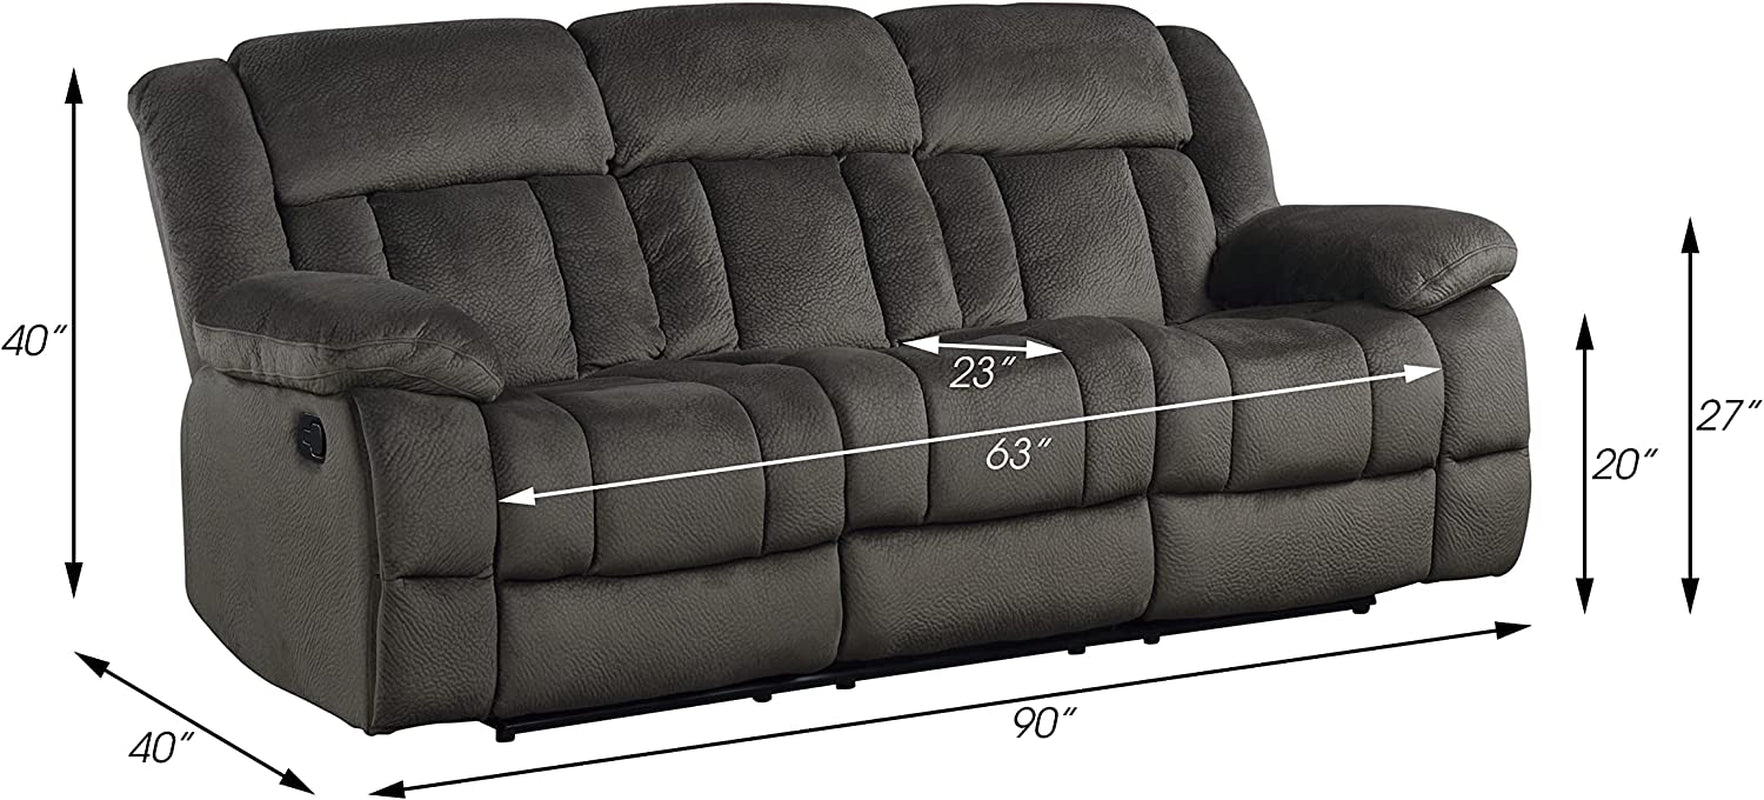 Double Reclining Sofa in Brown Microfiber Fabric